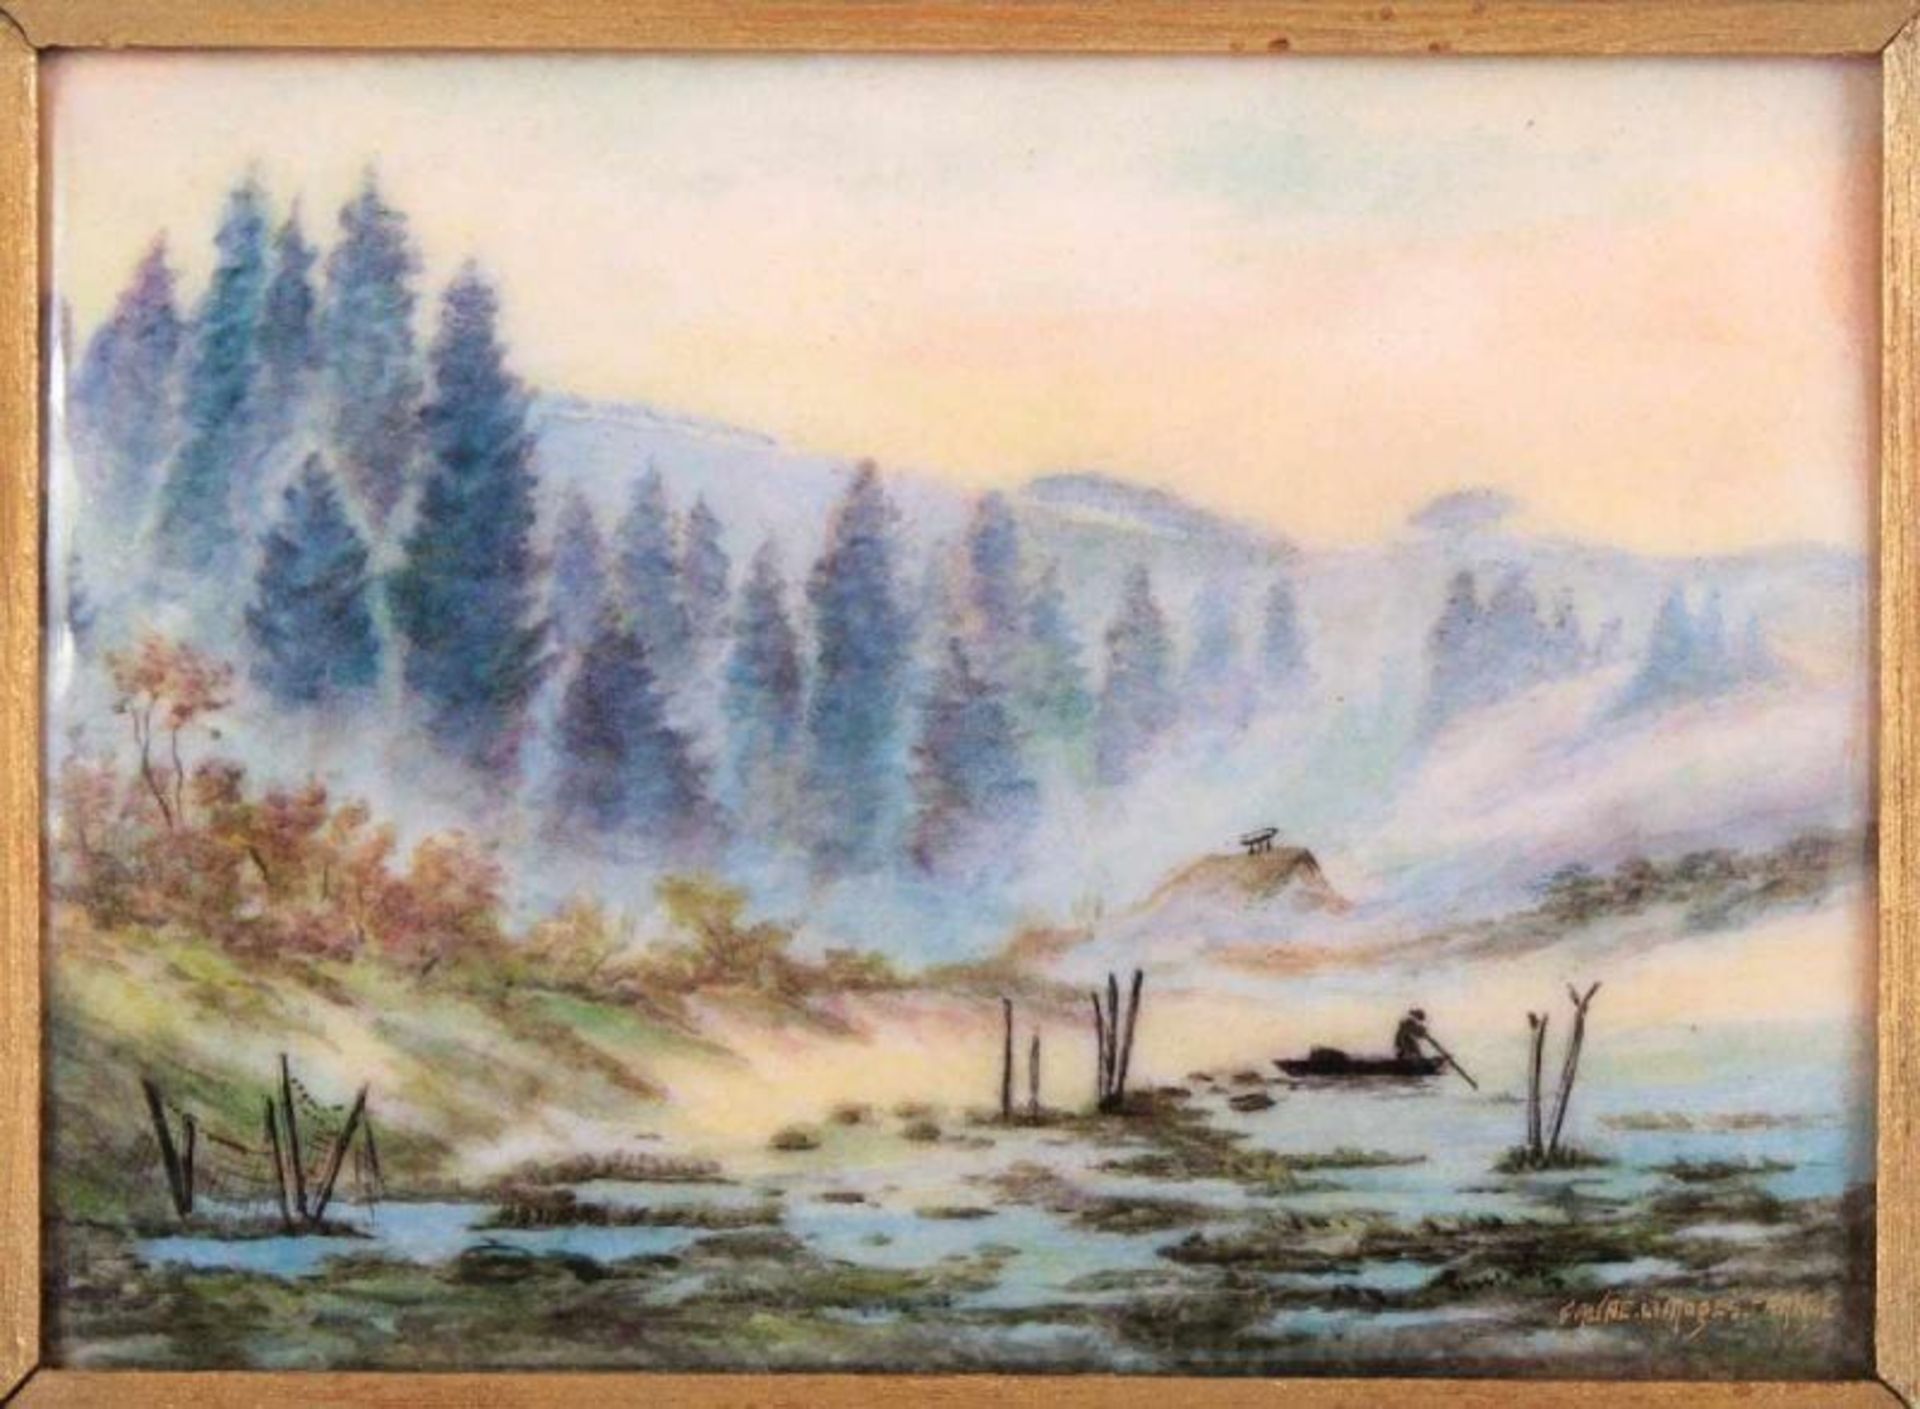 EMAILBILD, "Landschaft", 11 x 14,5, sign. Camille FAURÉ, LIMOGES, um 1920 22.00 % buyer's premium on